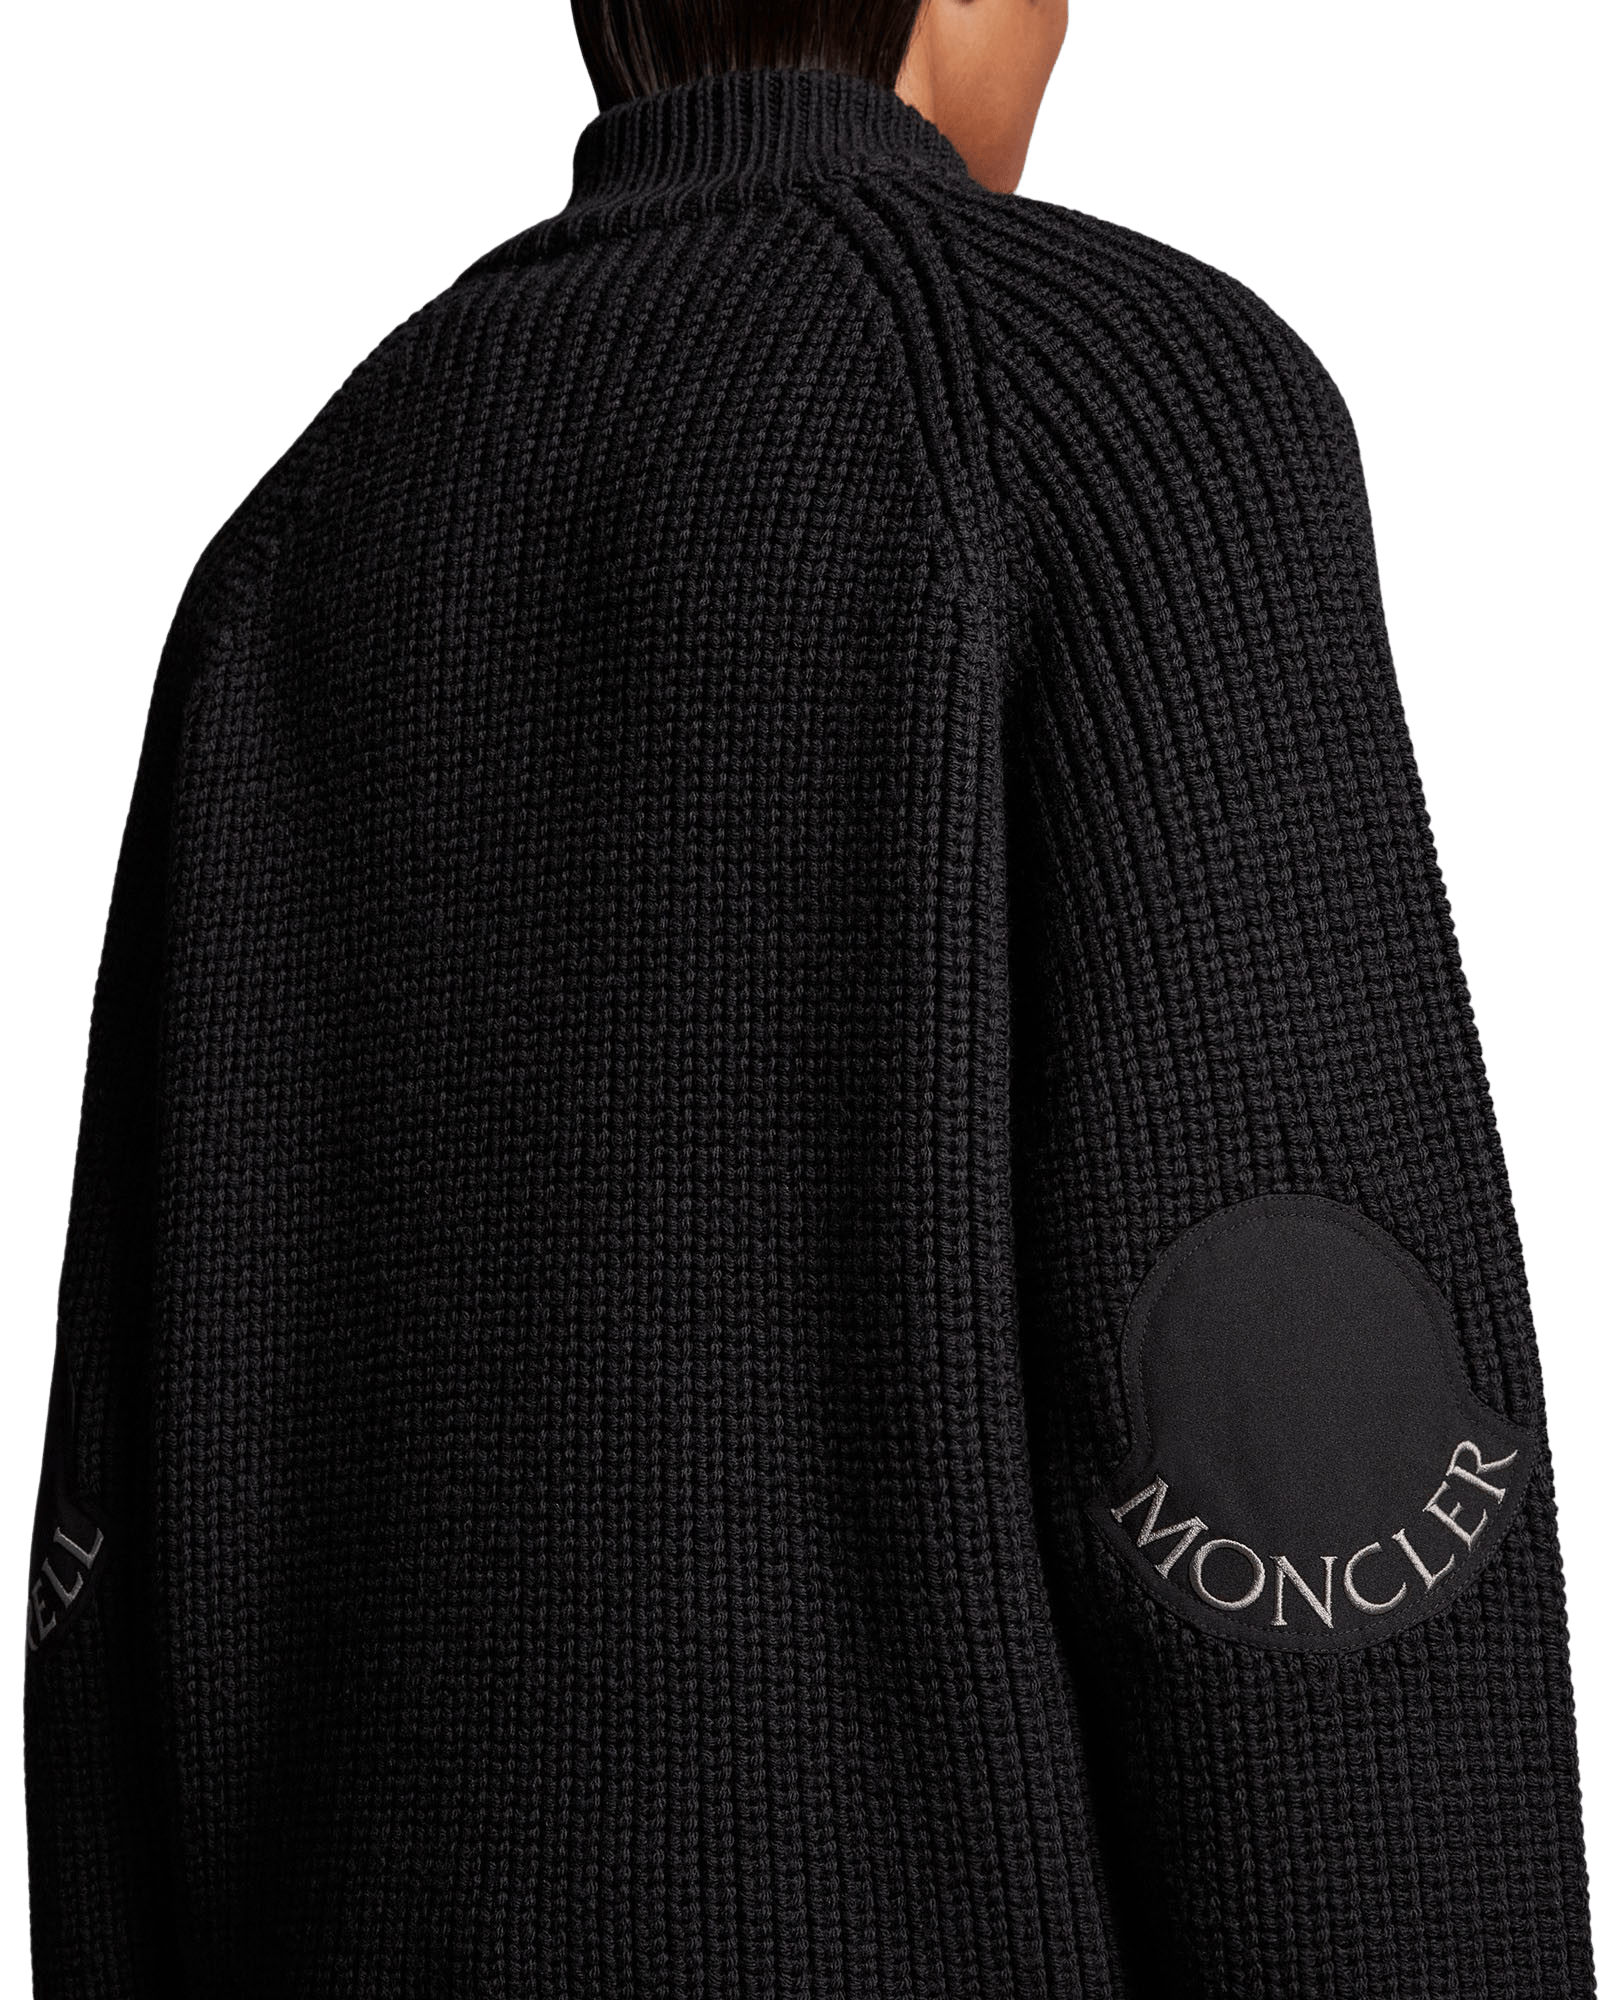 Moncler Genius x Pharrell Willams Knit Sweater